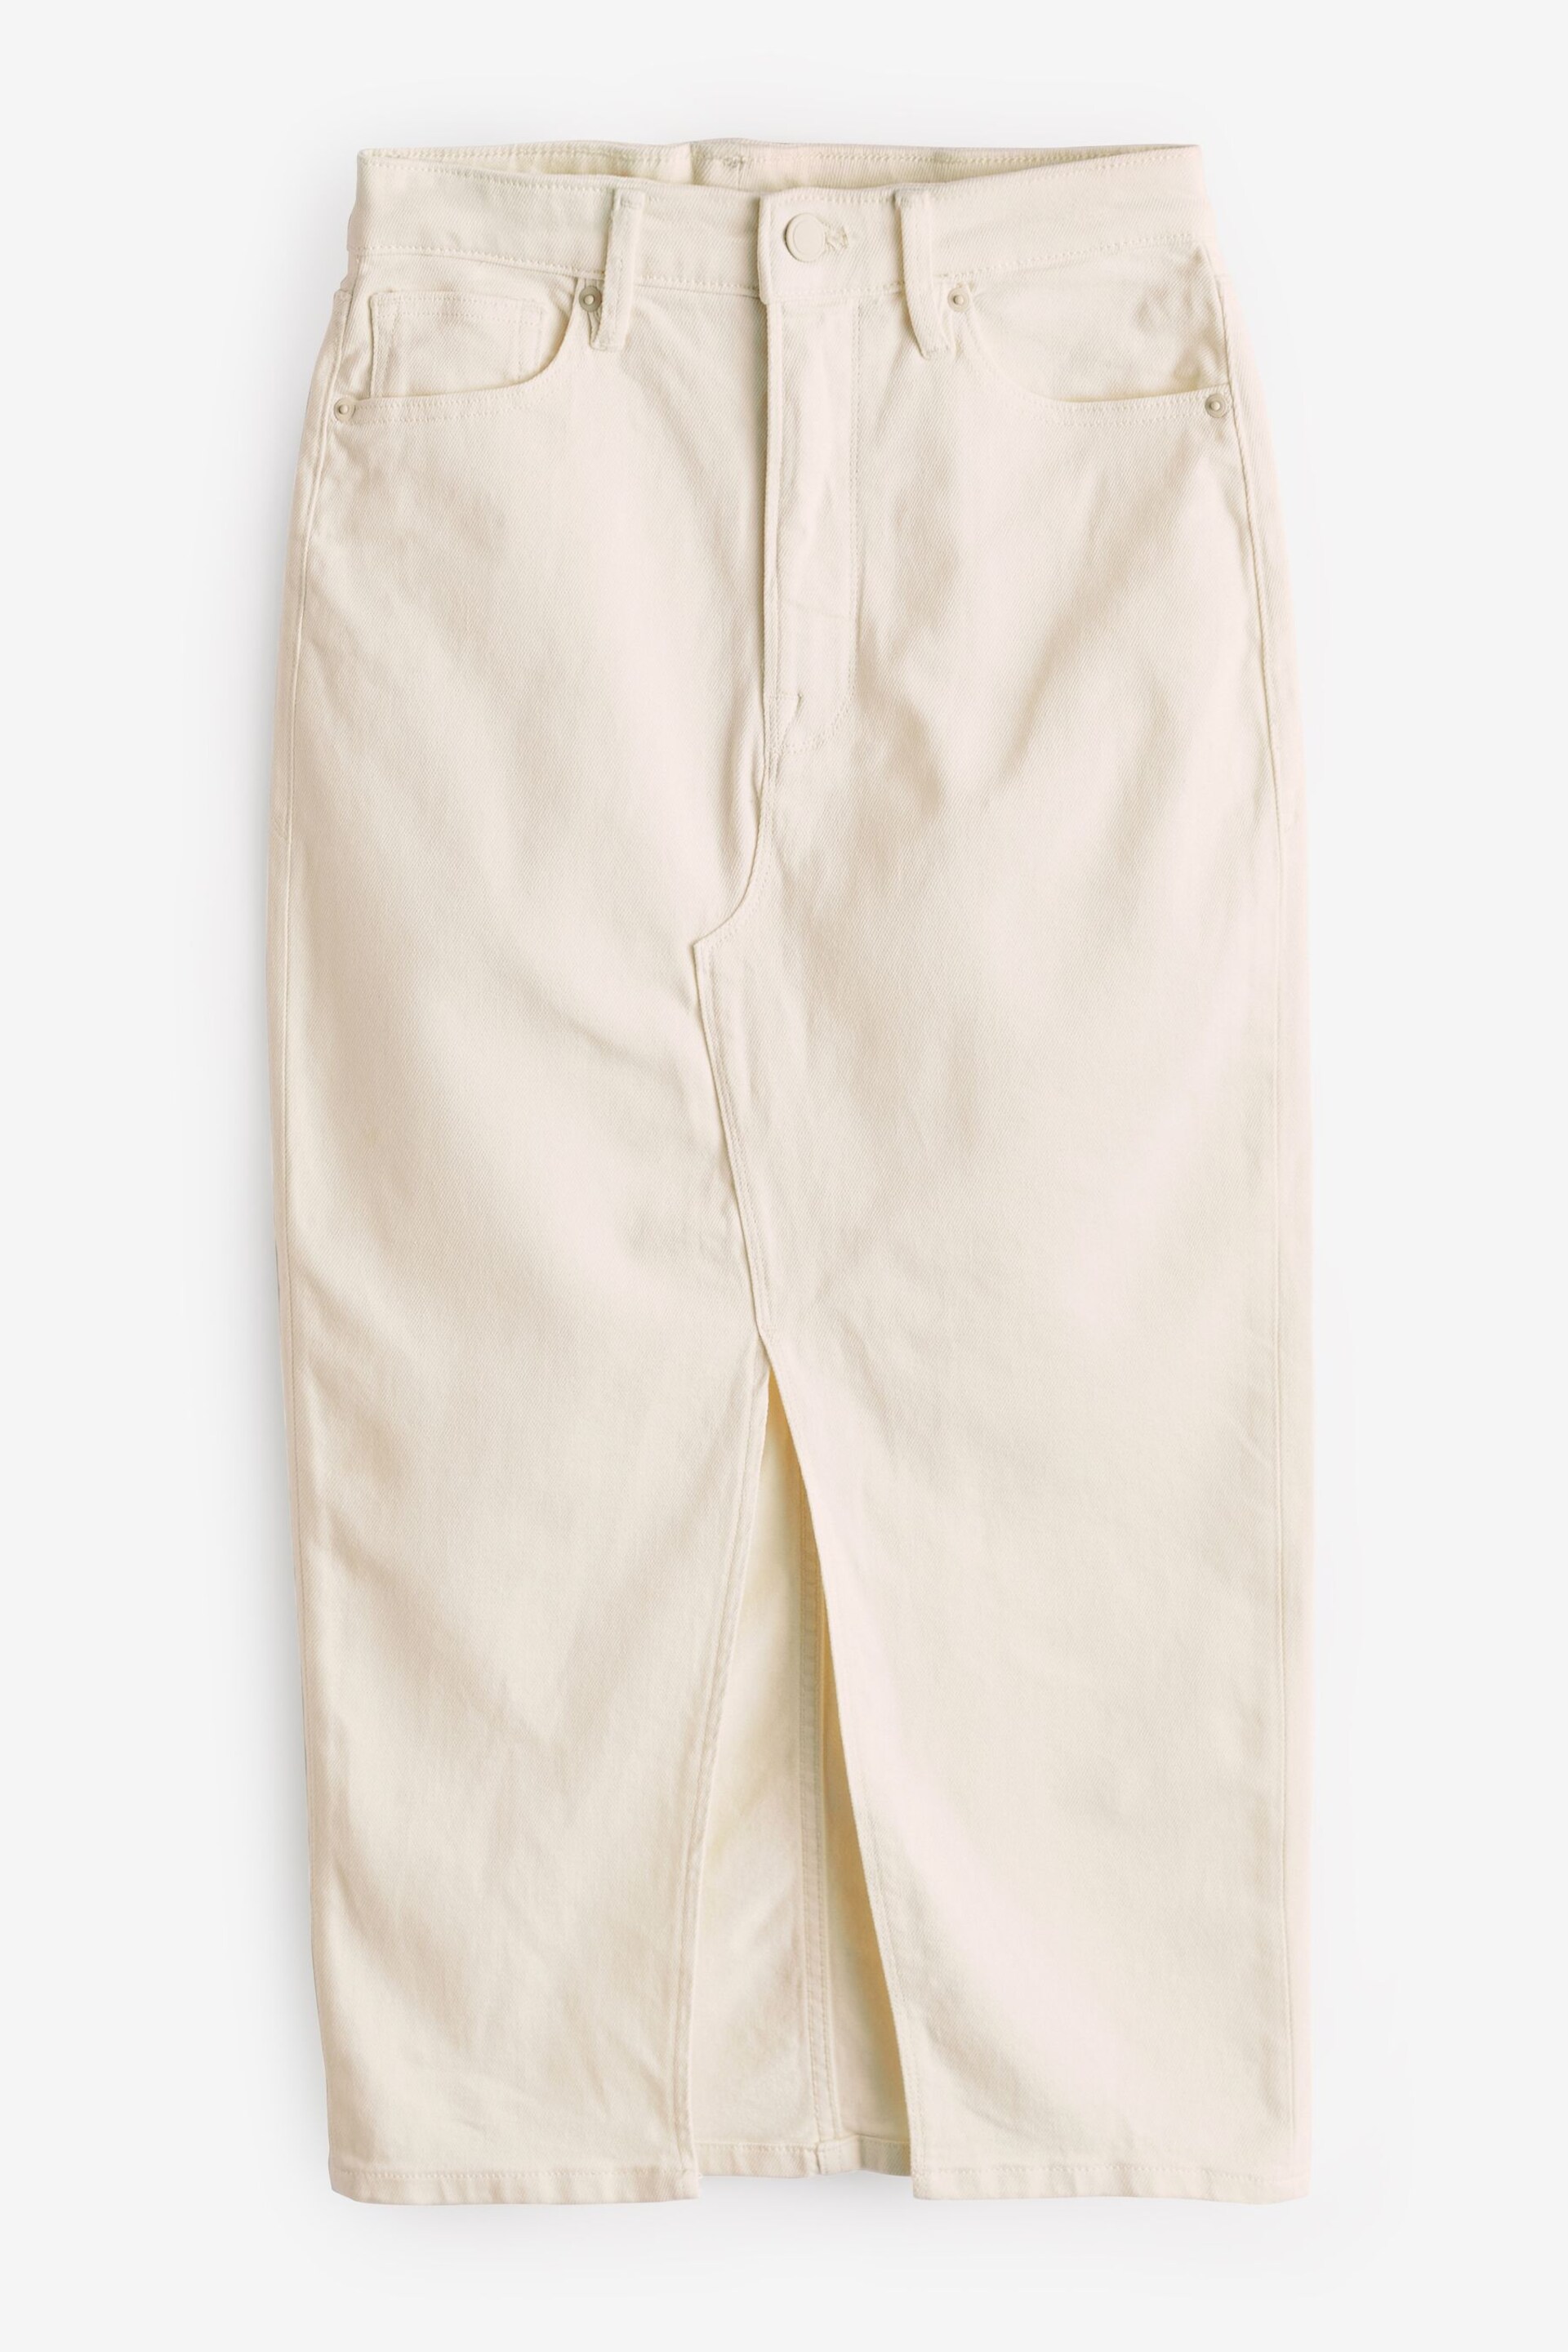 Good American White Midi Skirt - Image 7 of 7